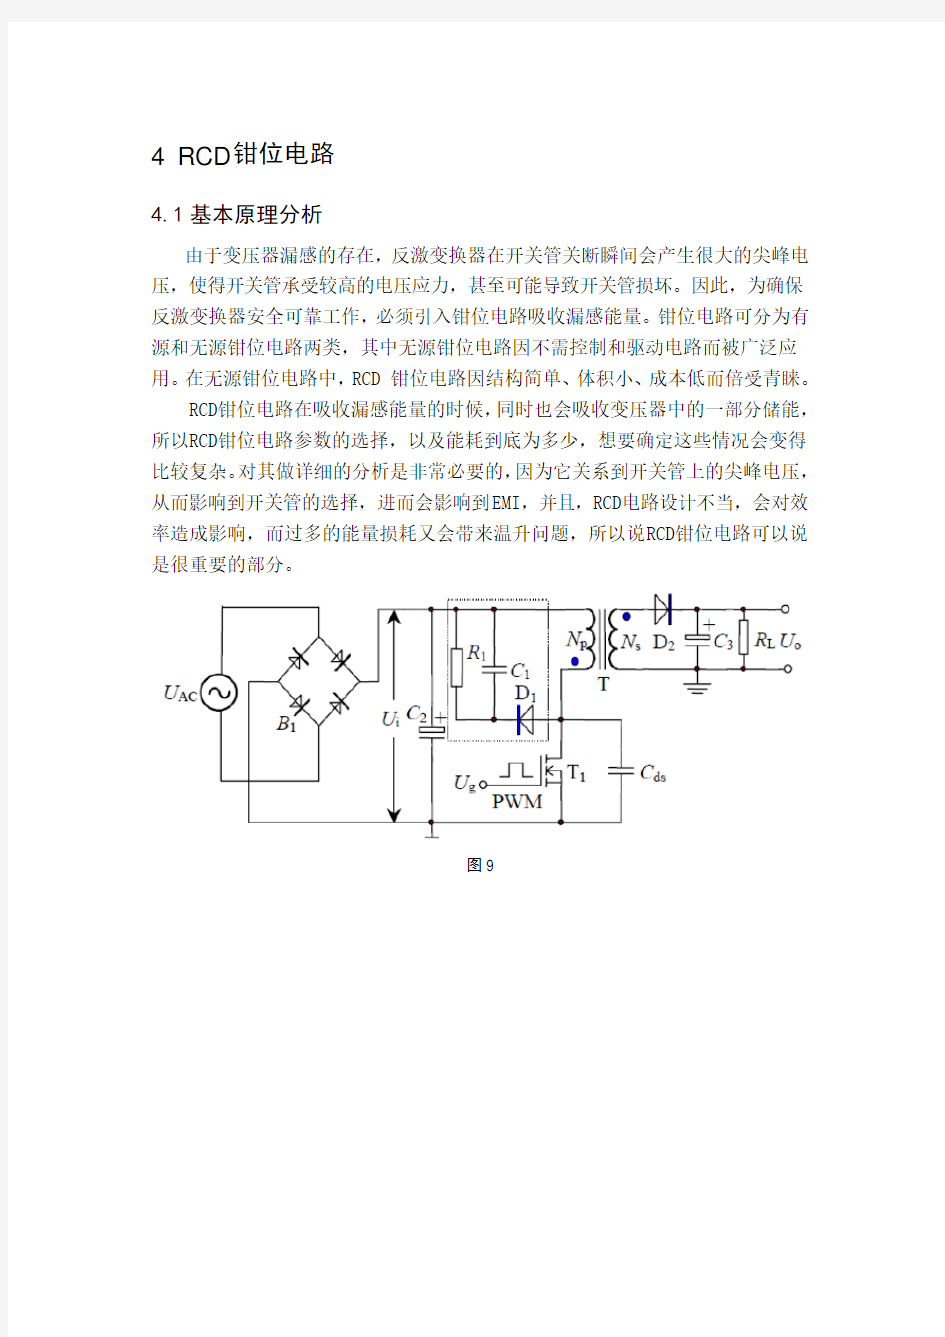 RCD钳位电路分析及参数设计[001]